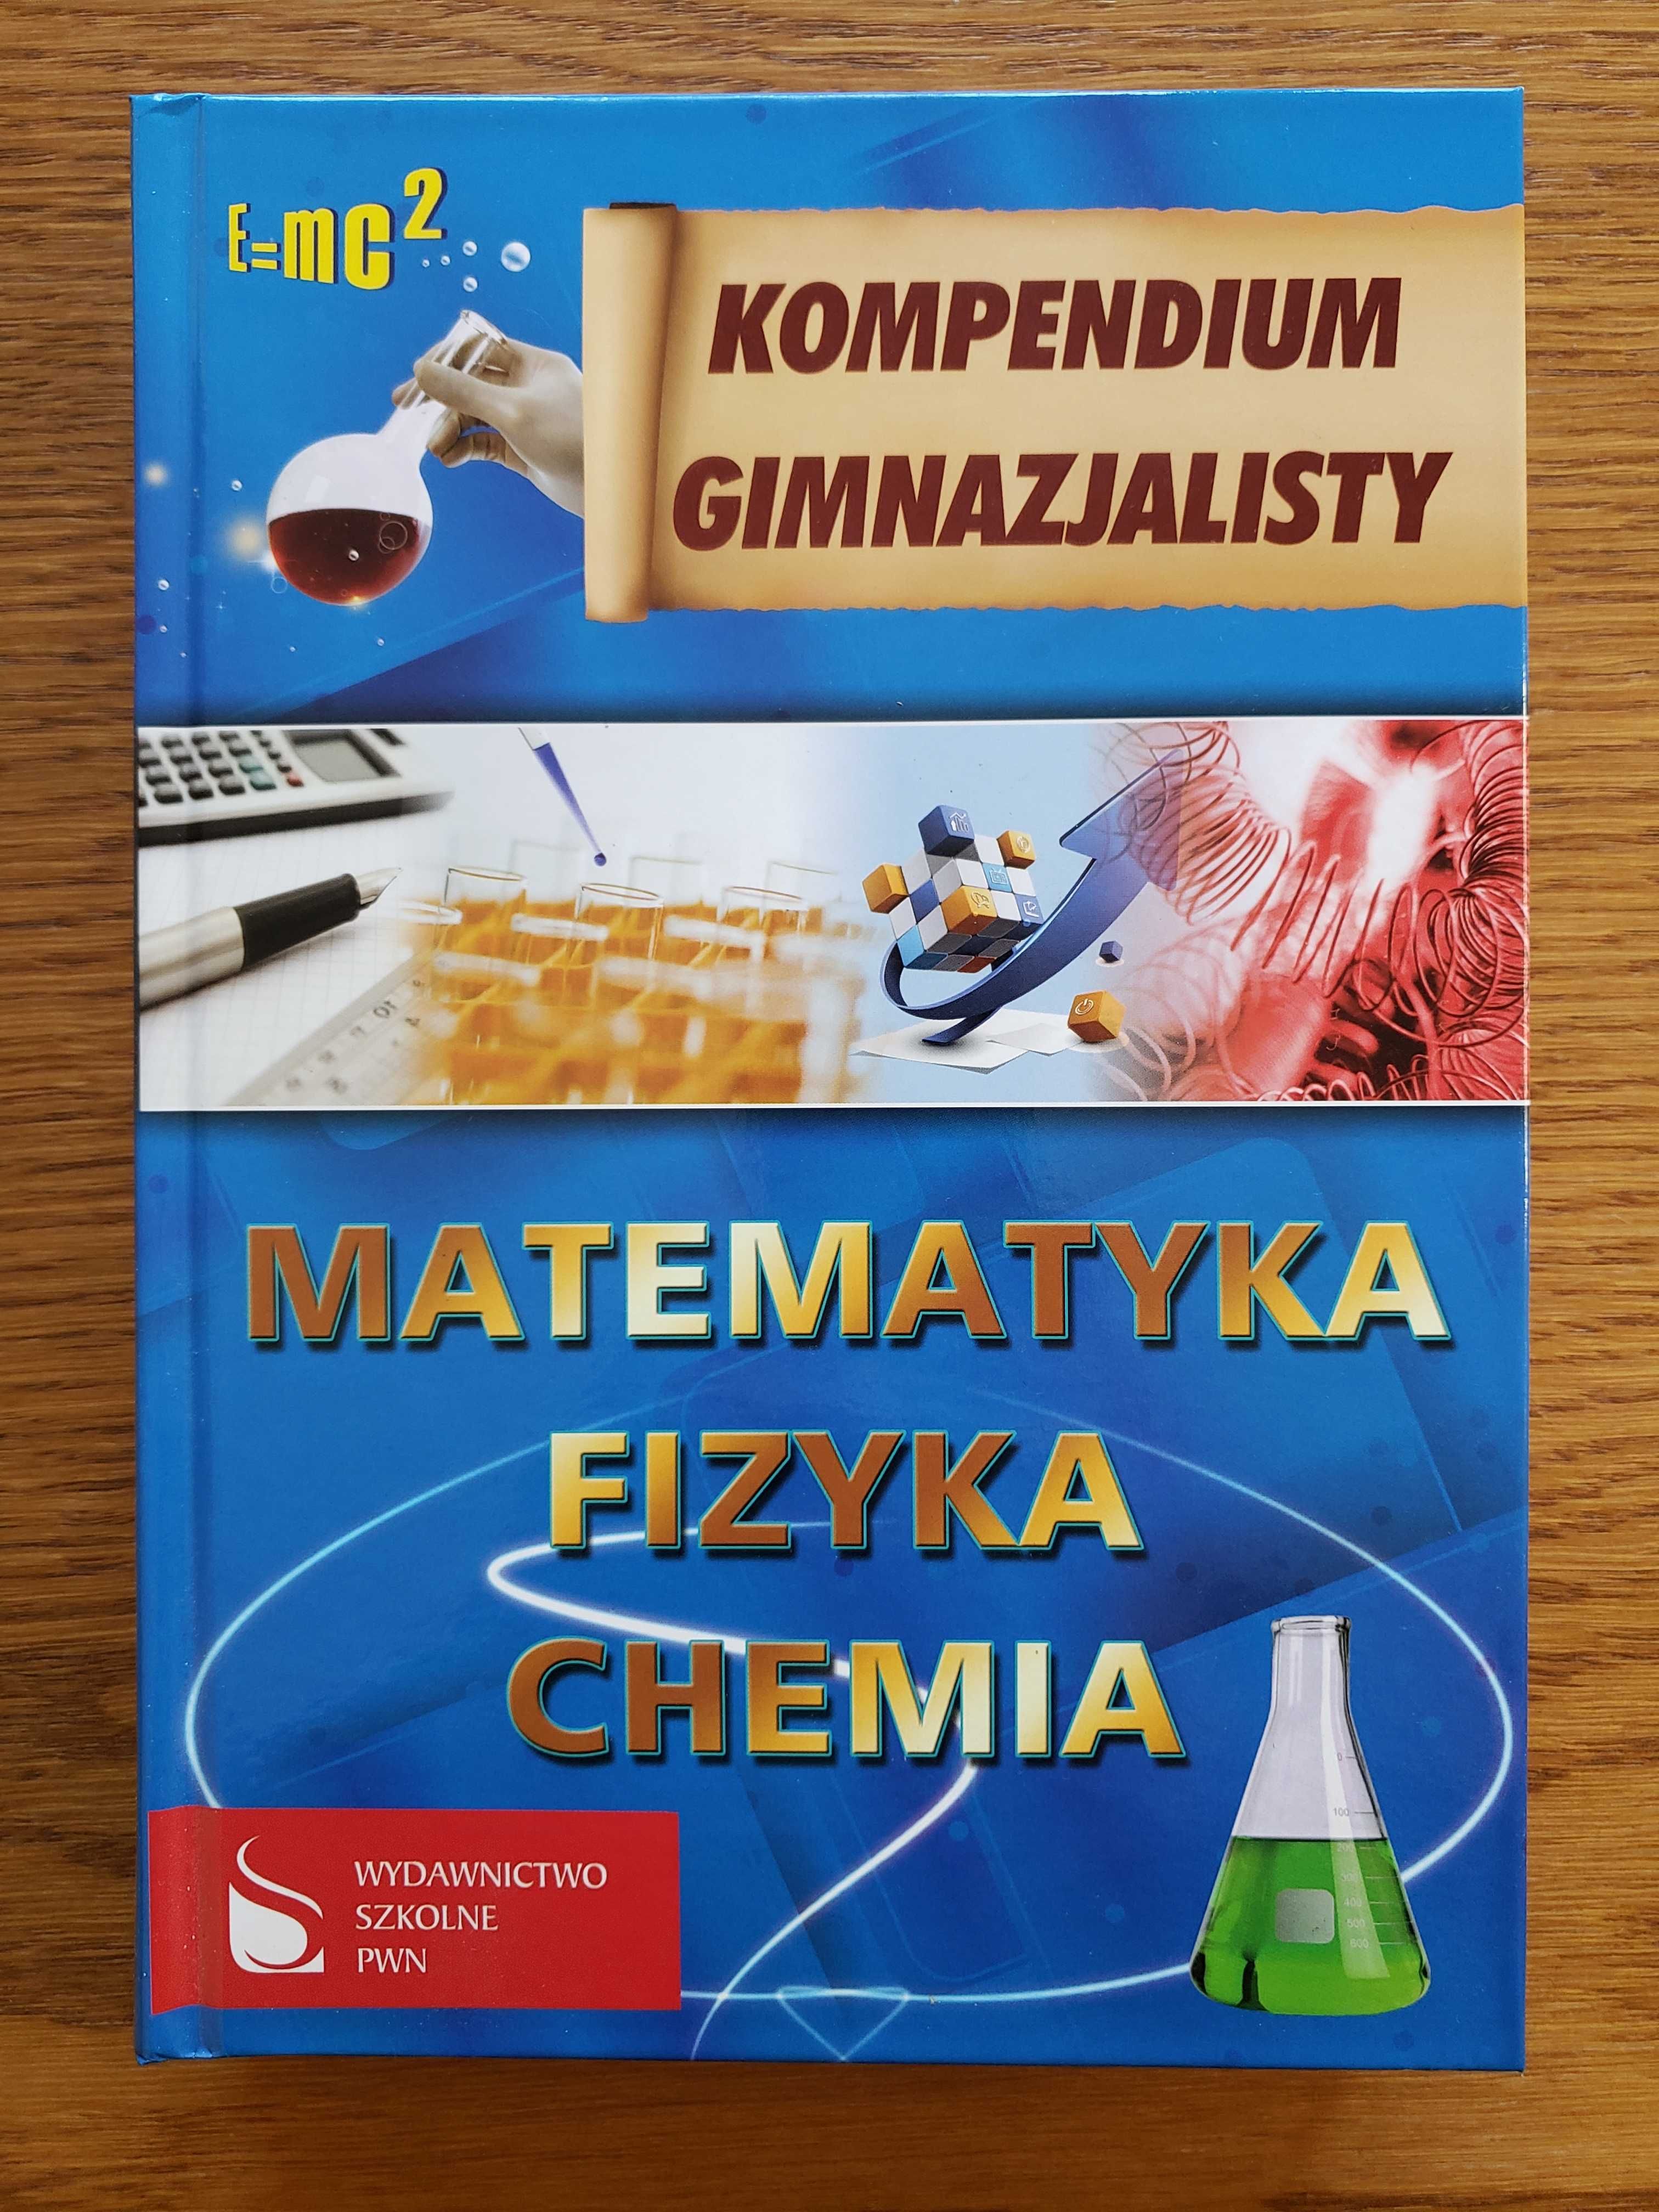 Matematyka, Fizyka, Chemia - Kompendium gimnazjalisty